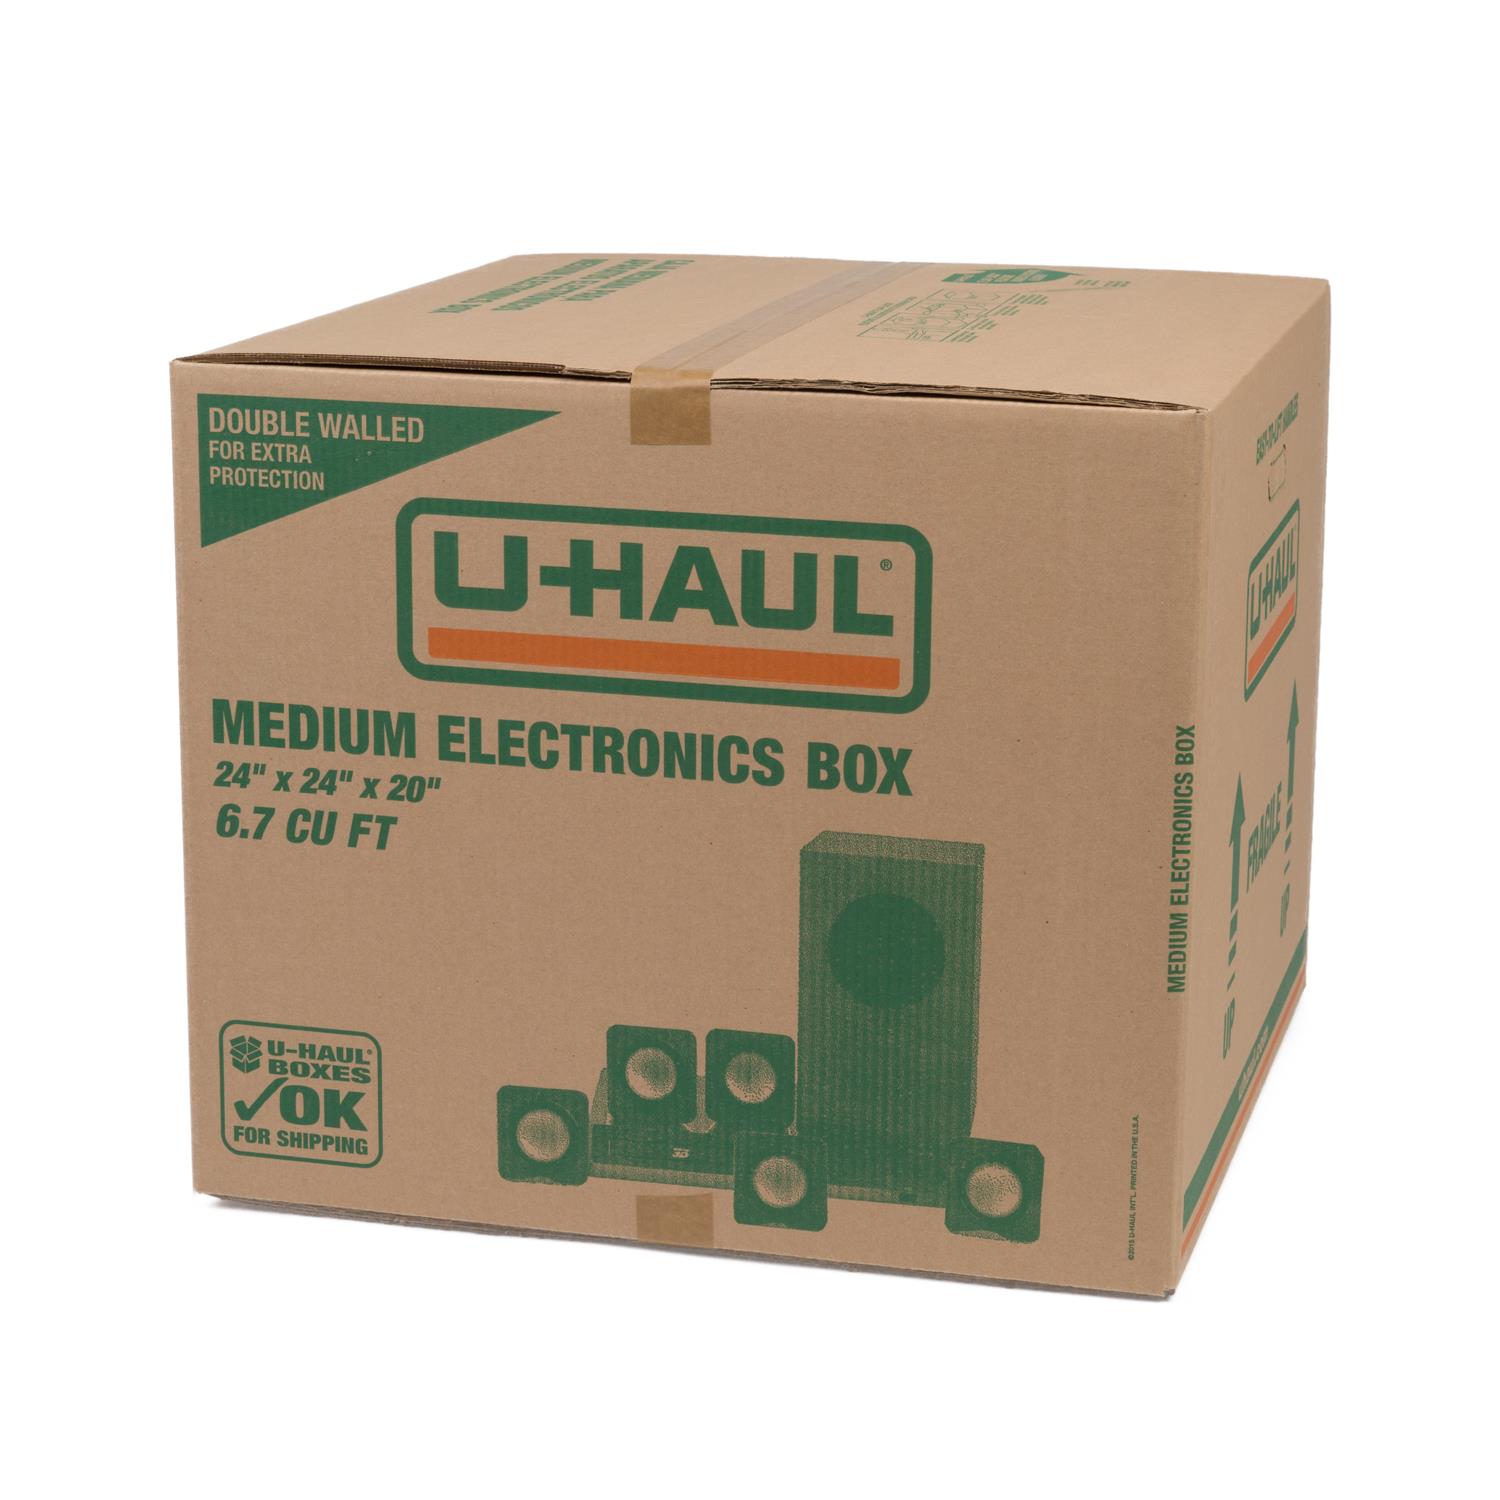 U-Haul: Medium Electronics Box